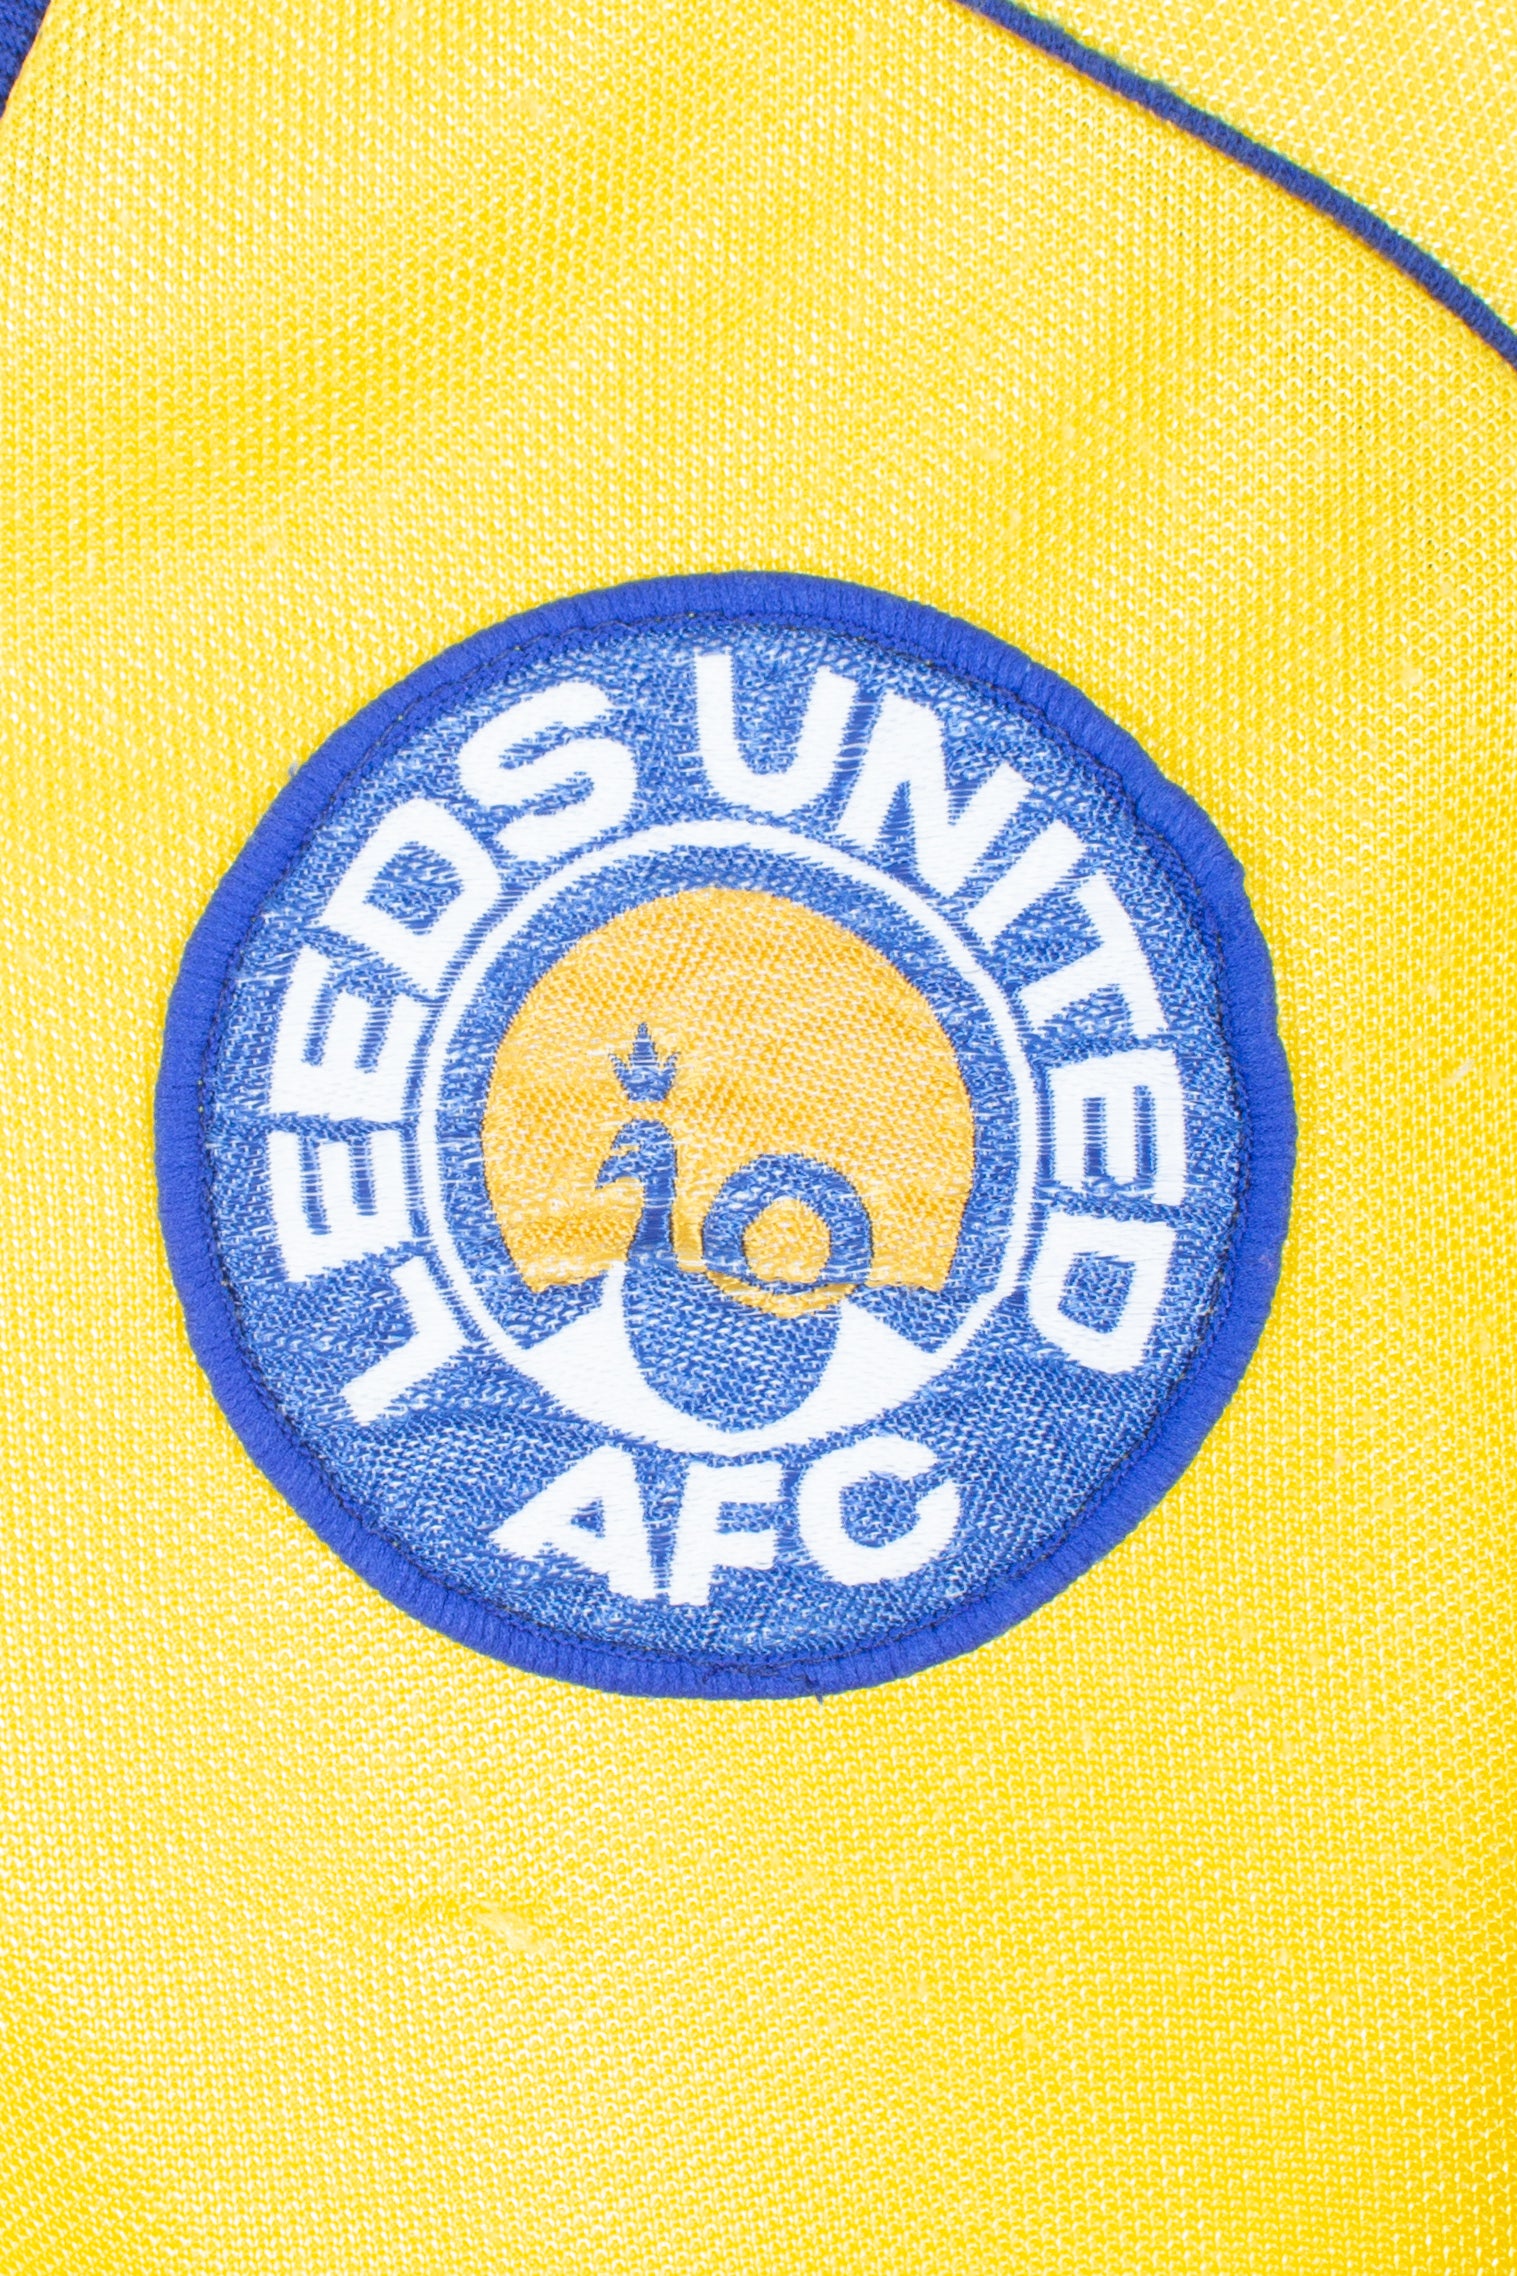 Leeds United 1982/86 Away Shirt (M)